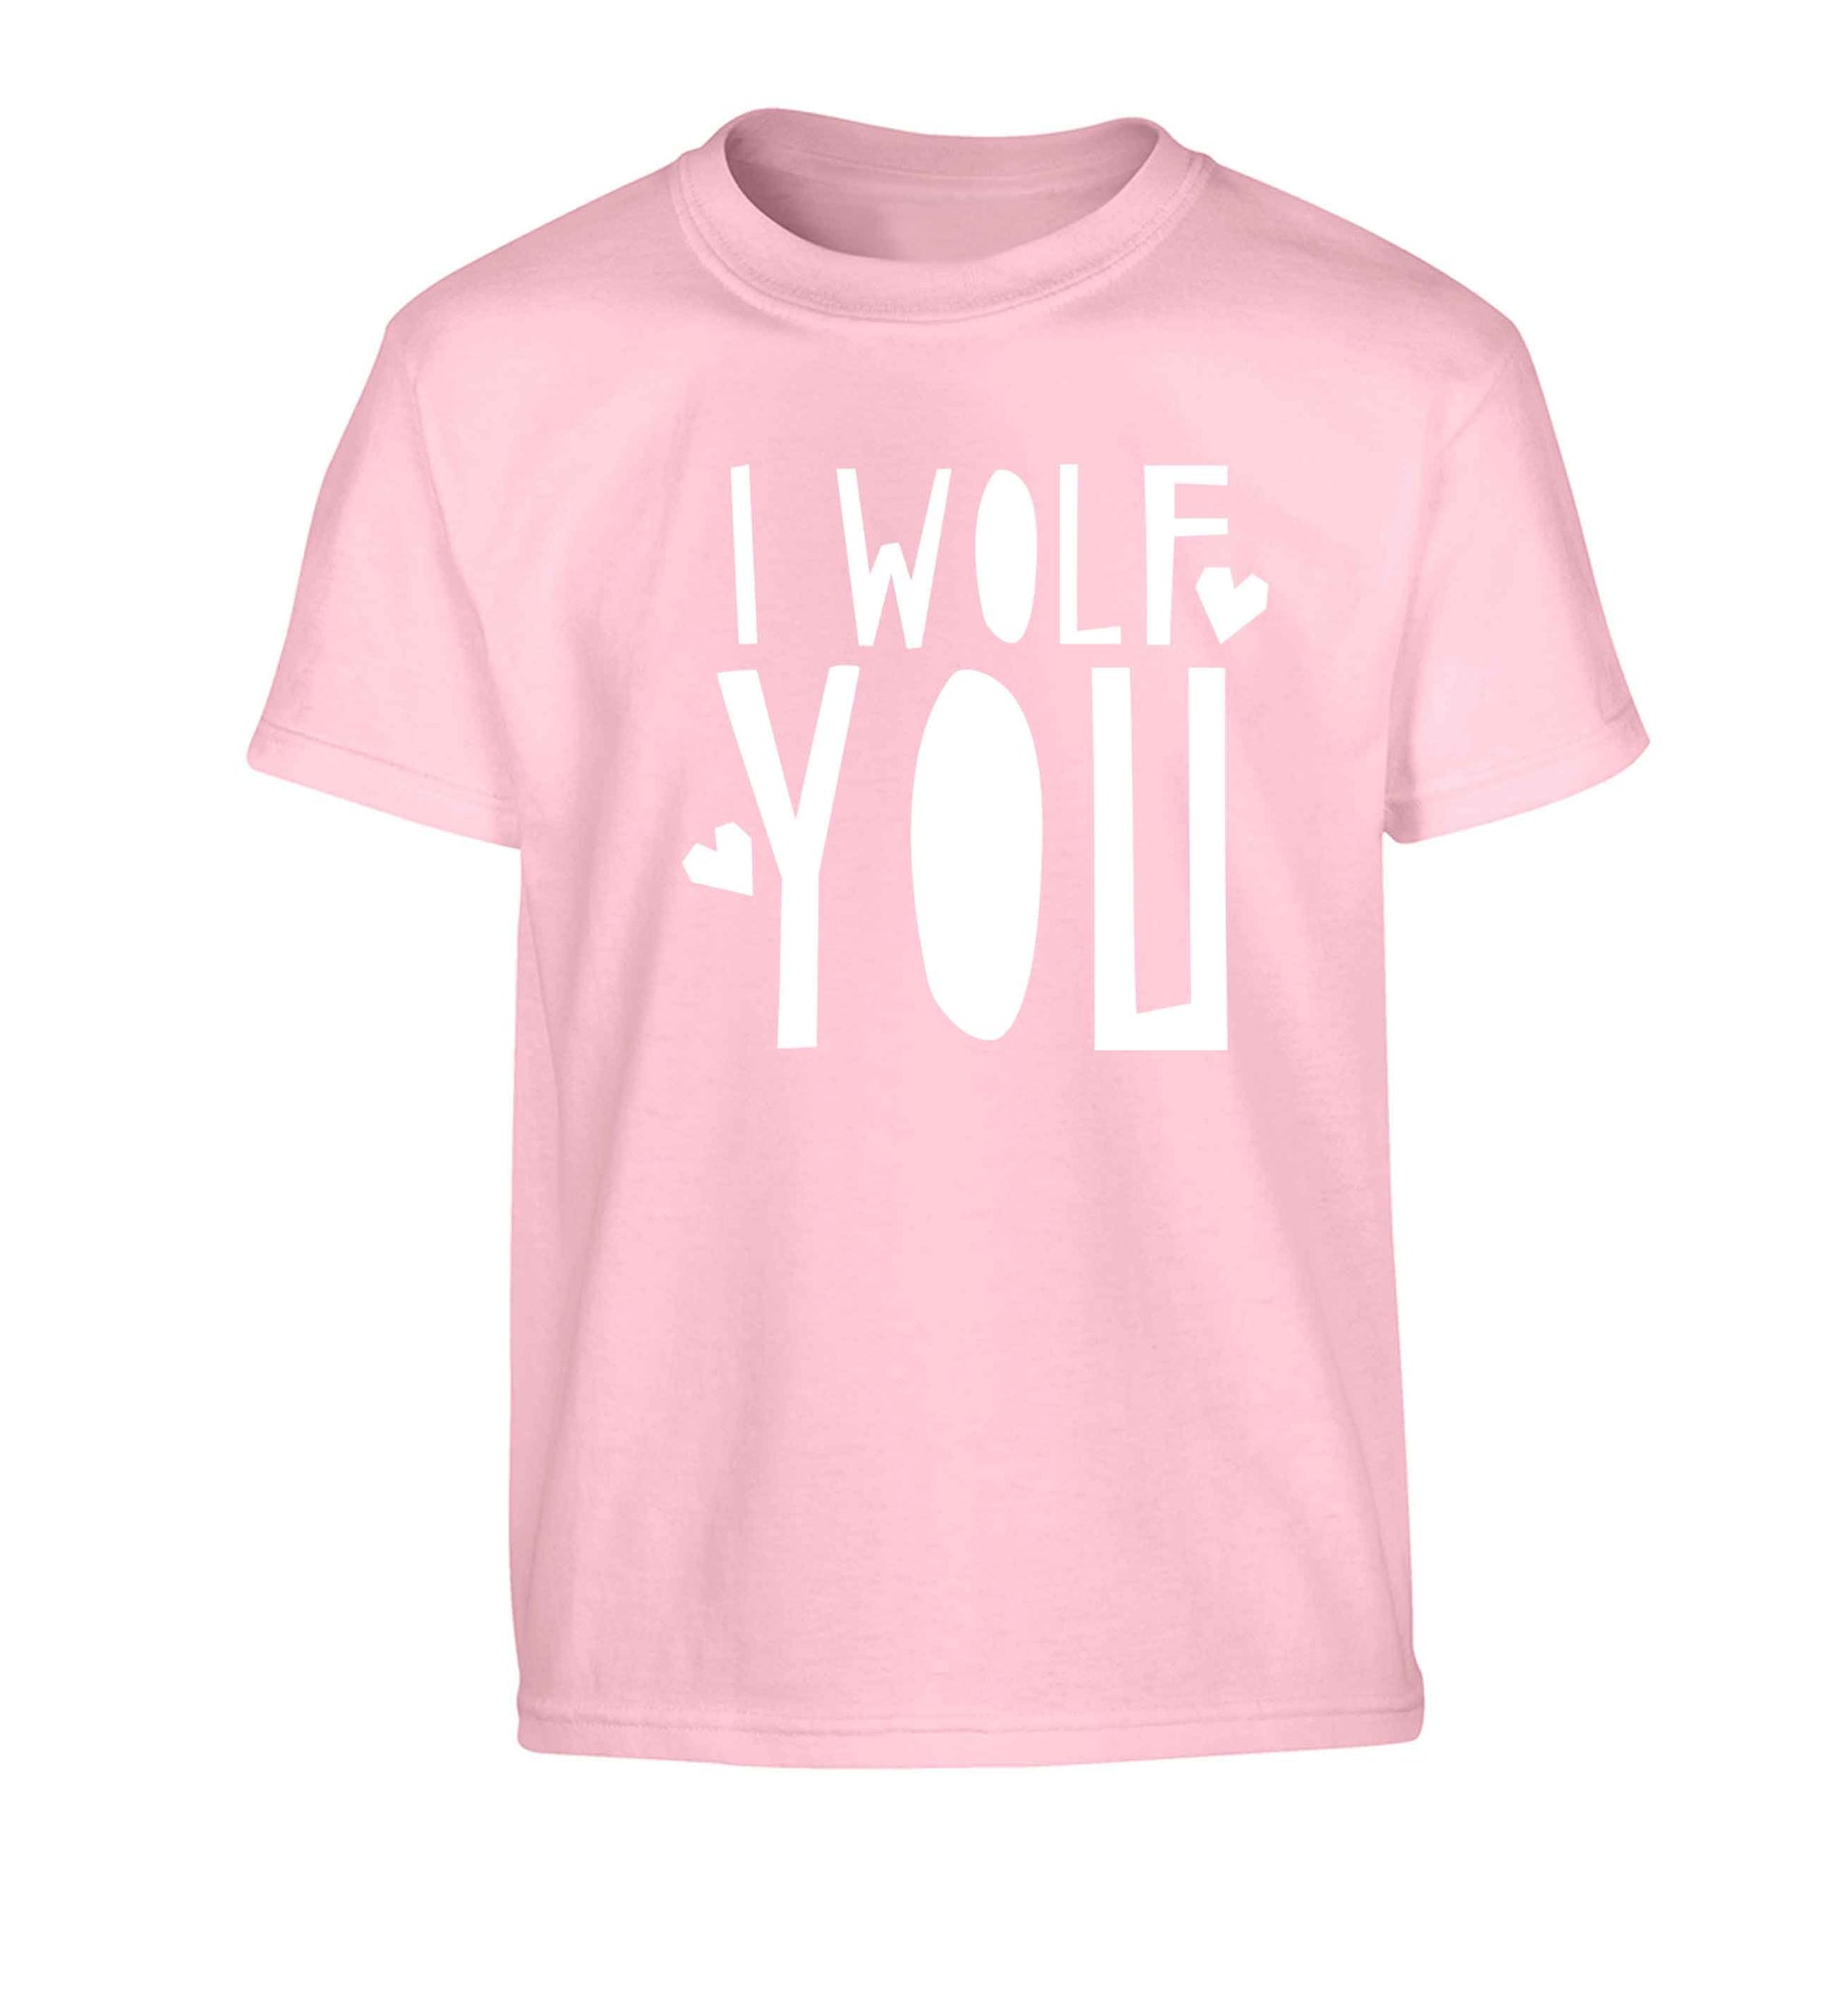 I wolf you Children's light pink Tshirt 12-13 Years